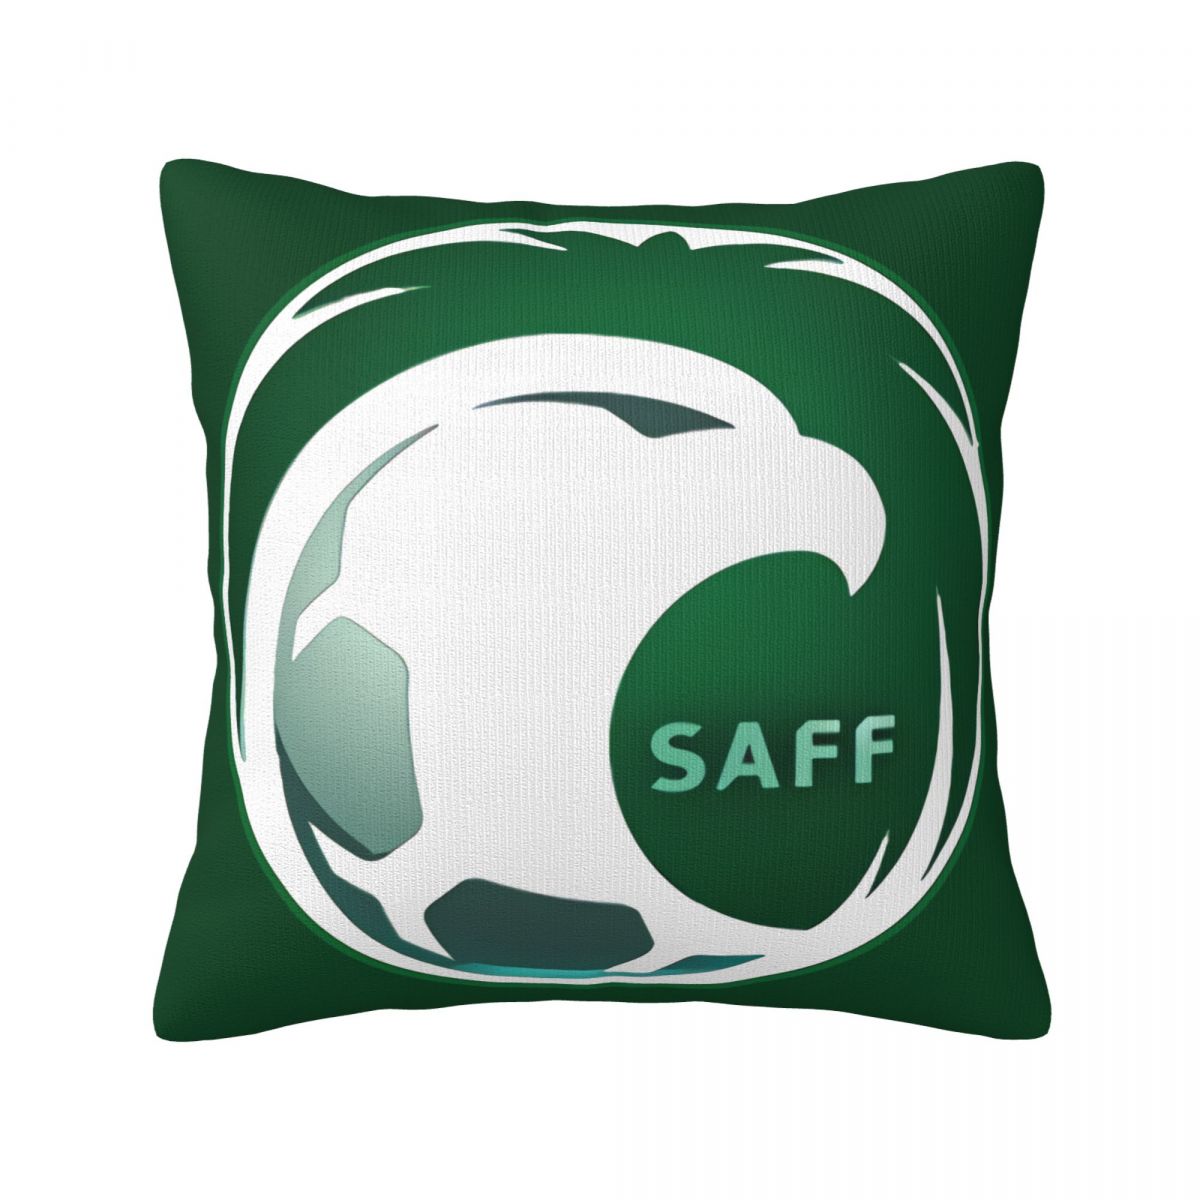 Saudi Arabia National Football Team Decorative Square Throw Pillow Covers